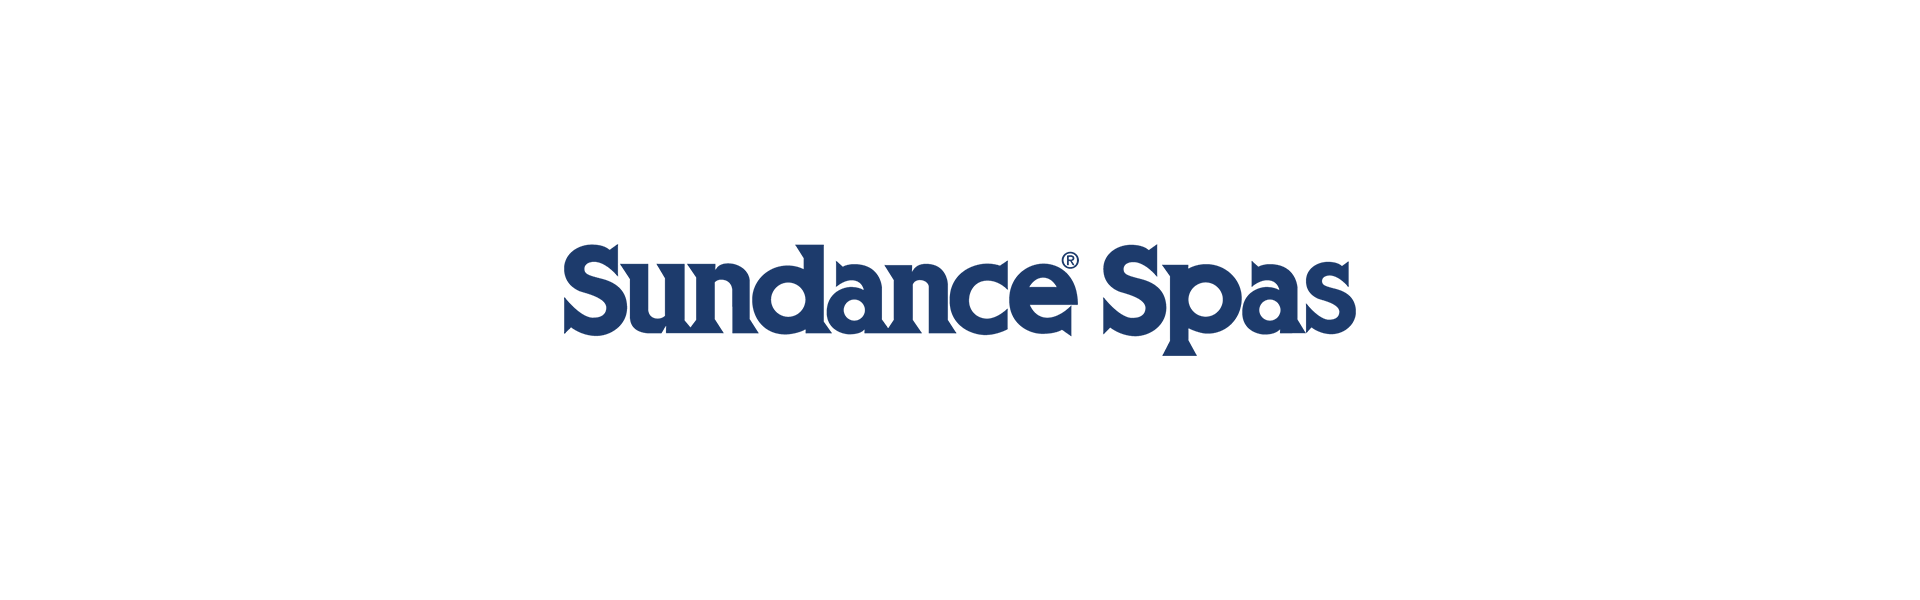 sundacne-title-logo2